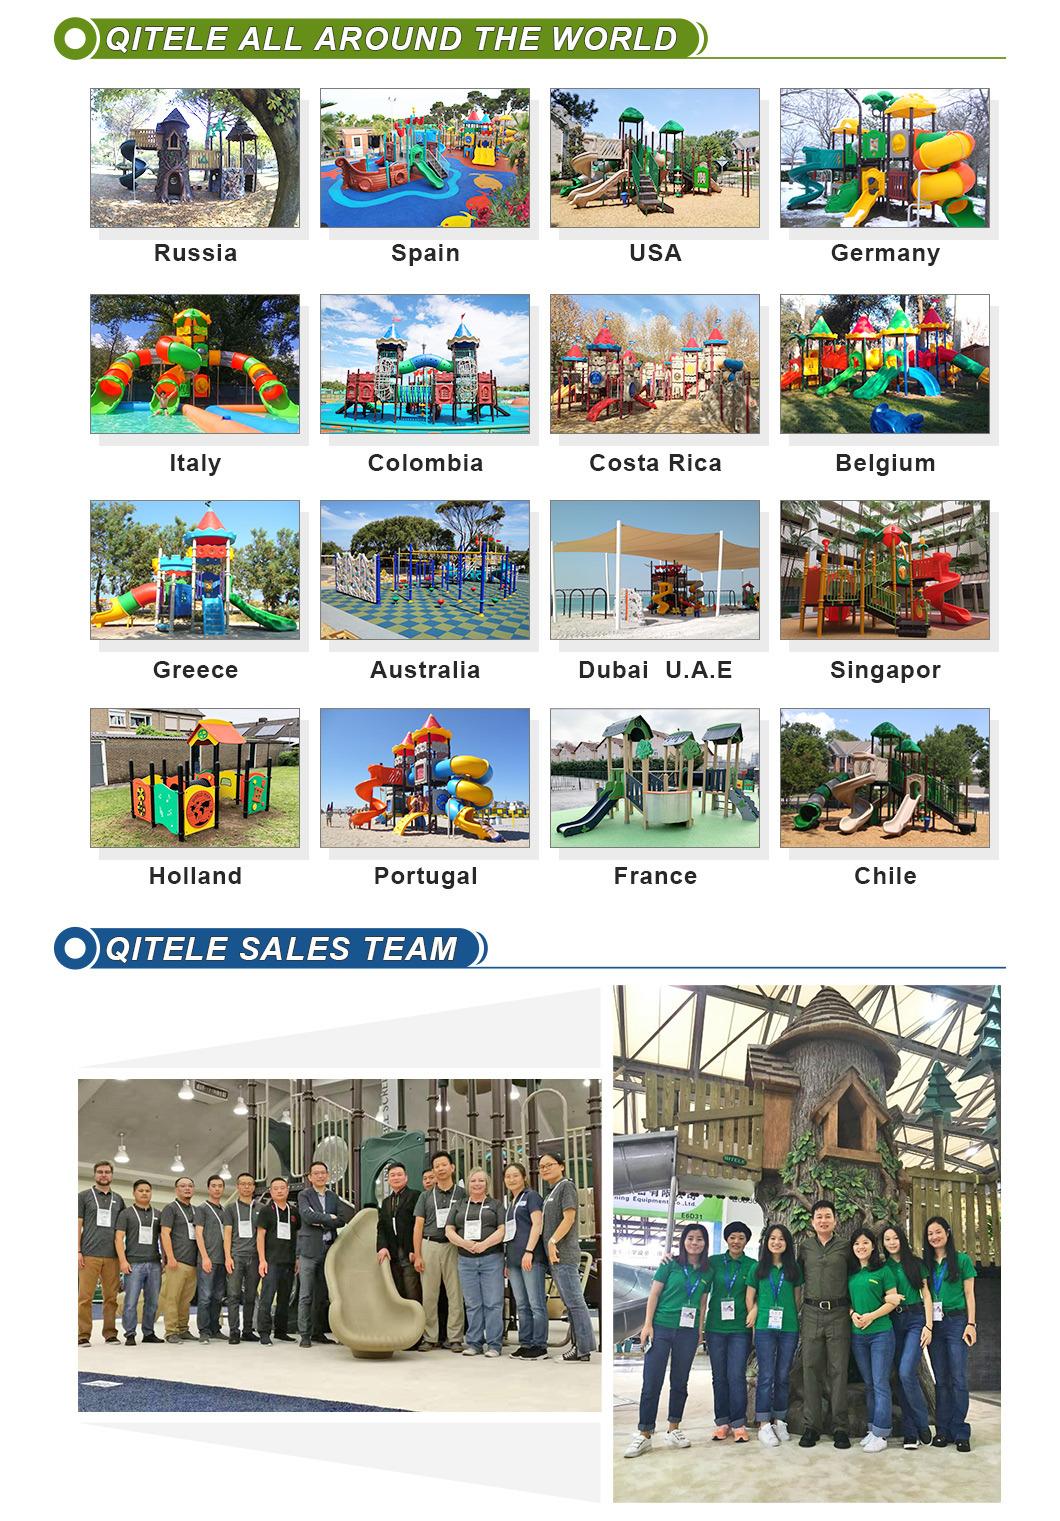 Qitele Outdoor Playground Equipment with Colour Design